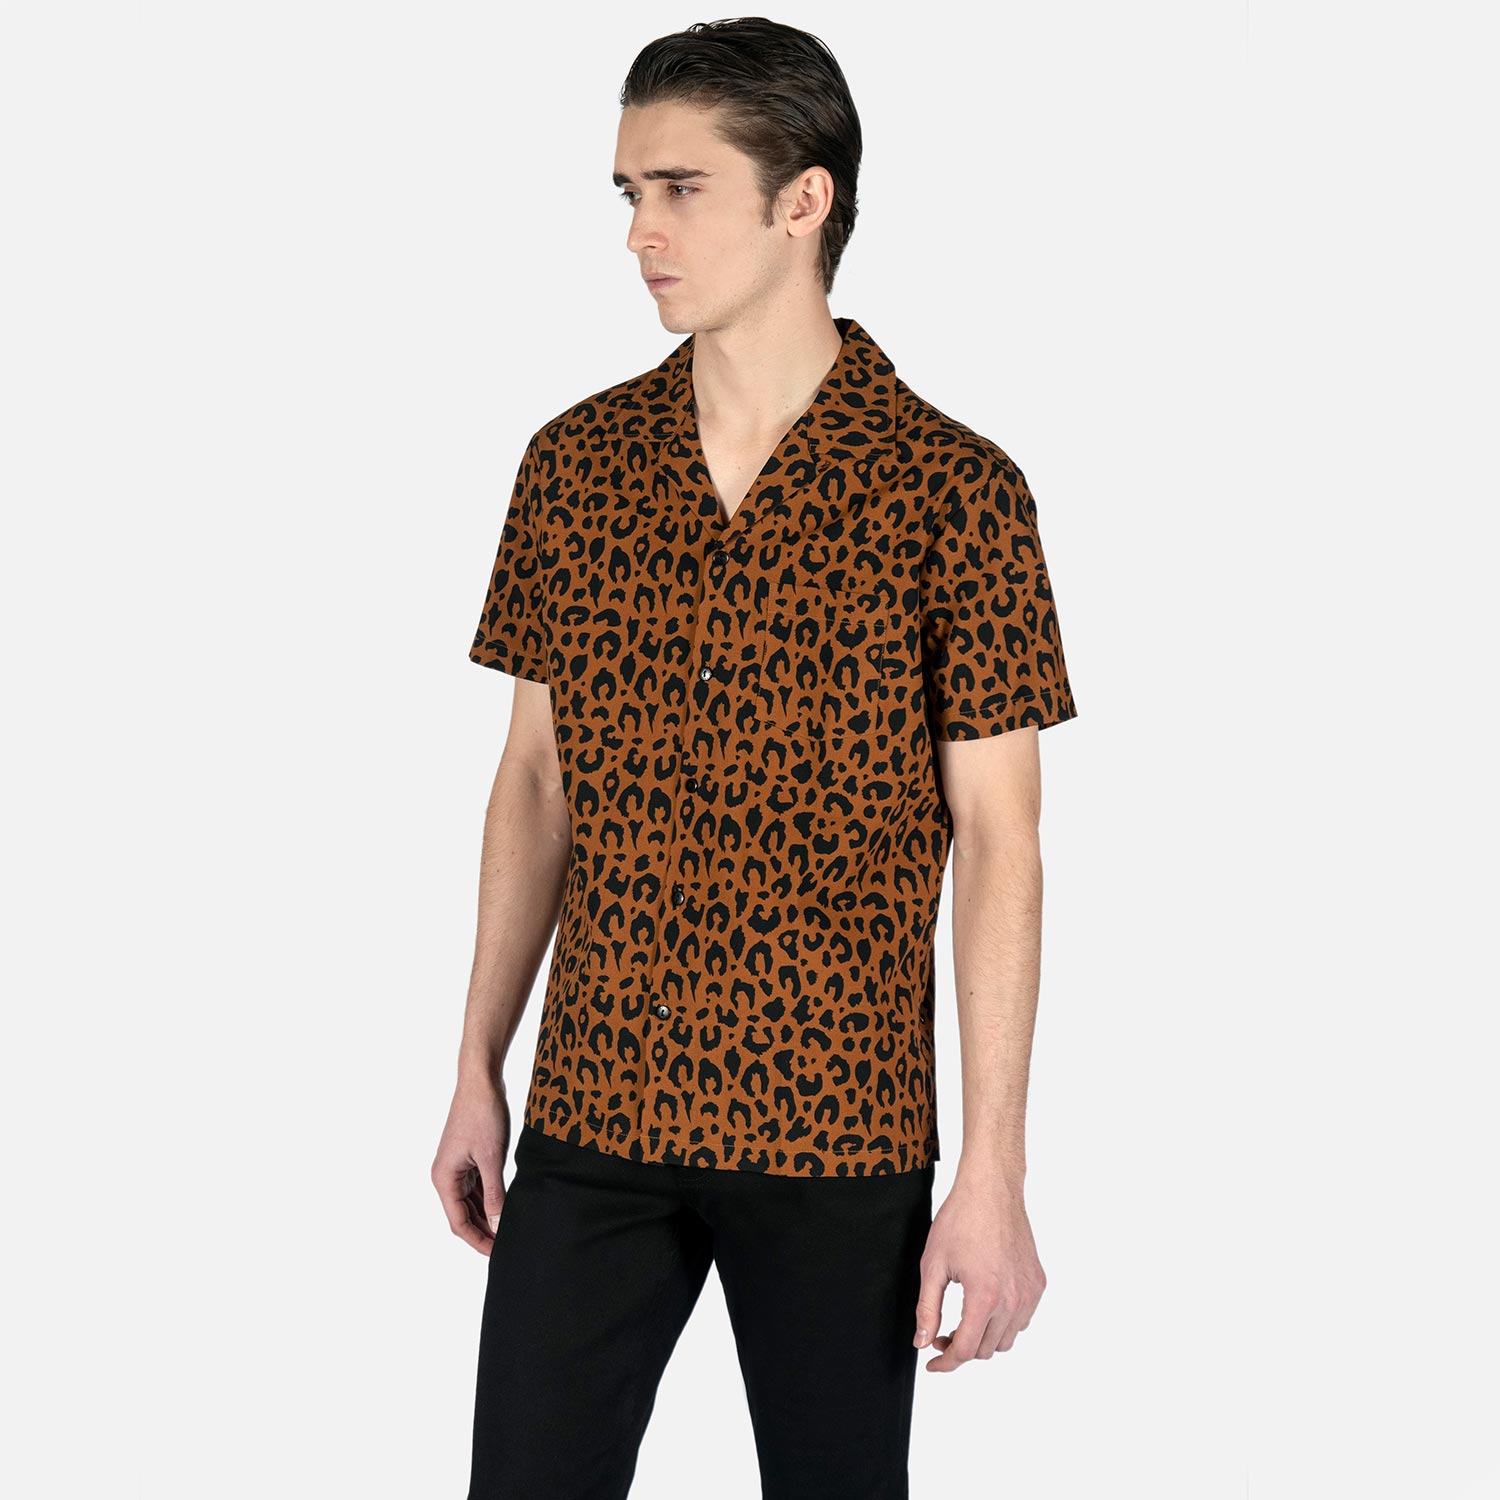 Boss Leopard - Brown and Black Leopard Print Shirt (Size S, M)